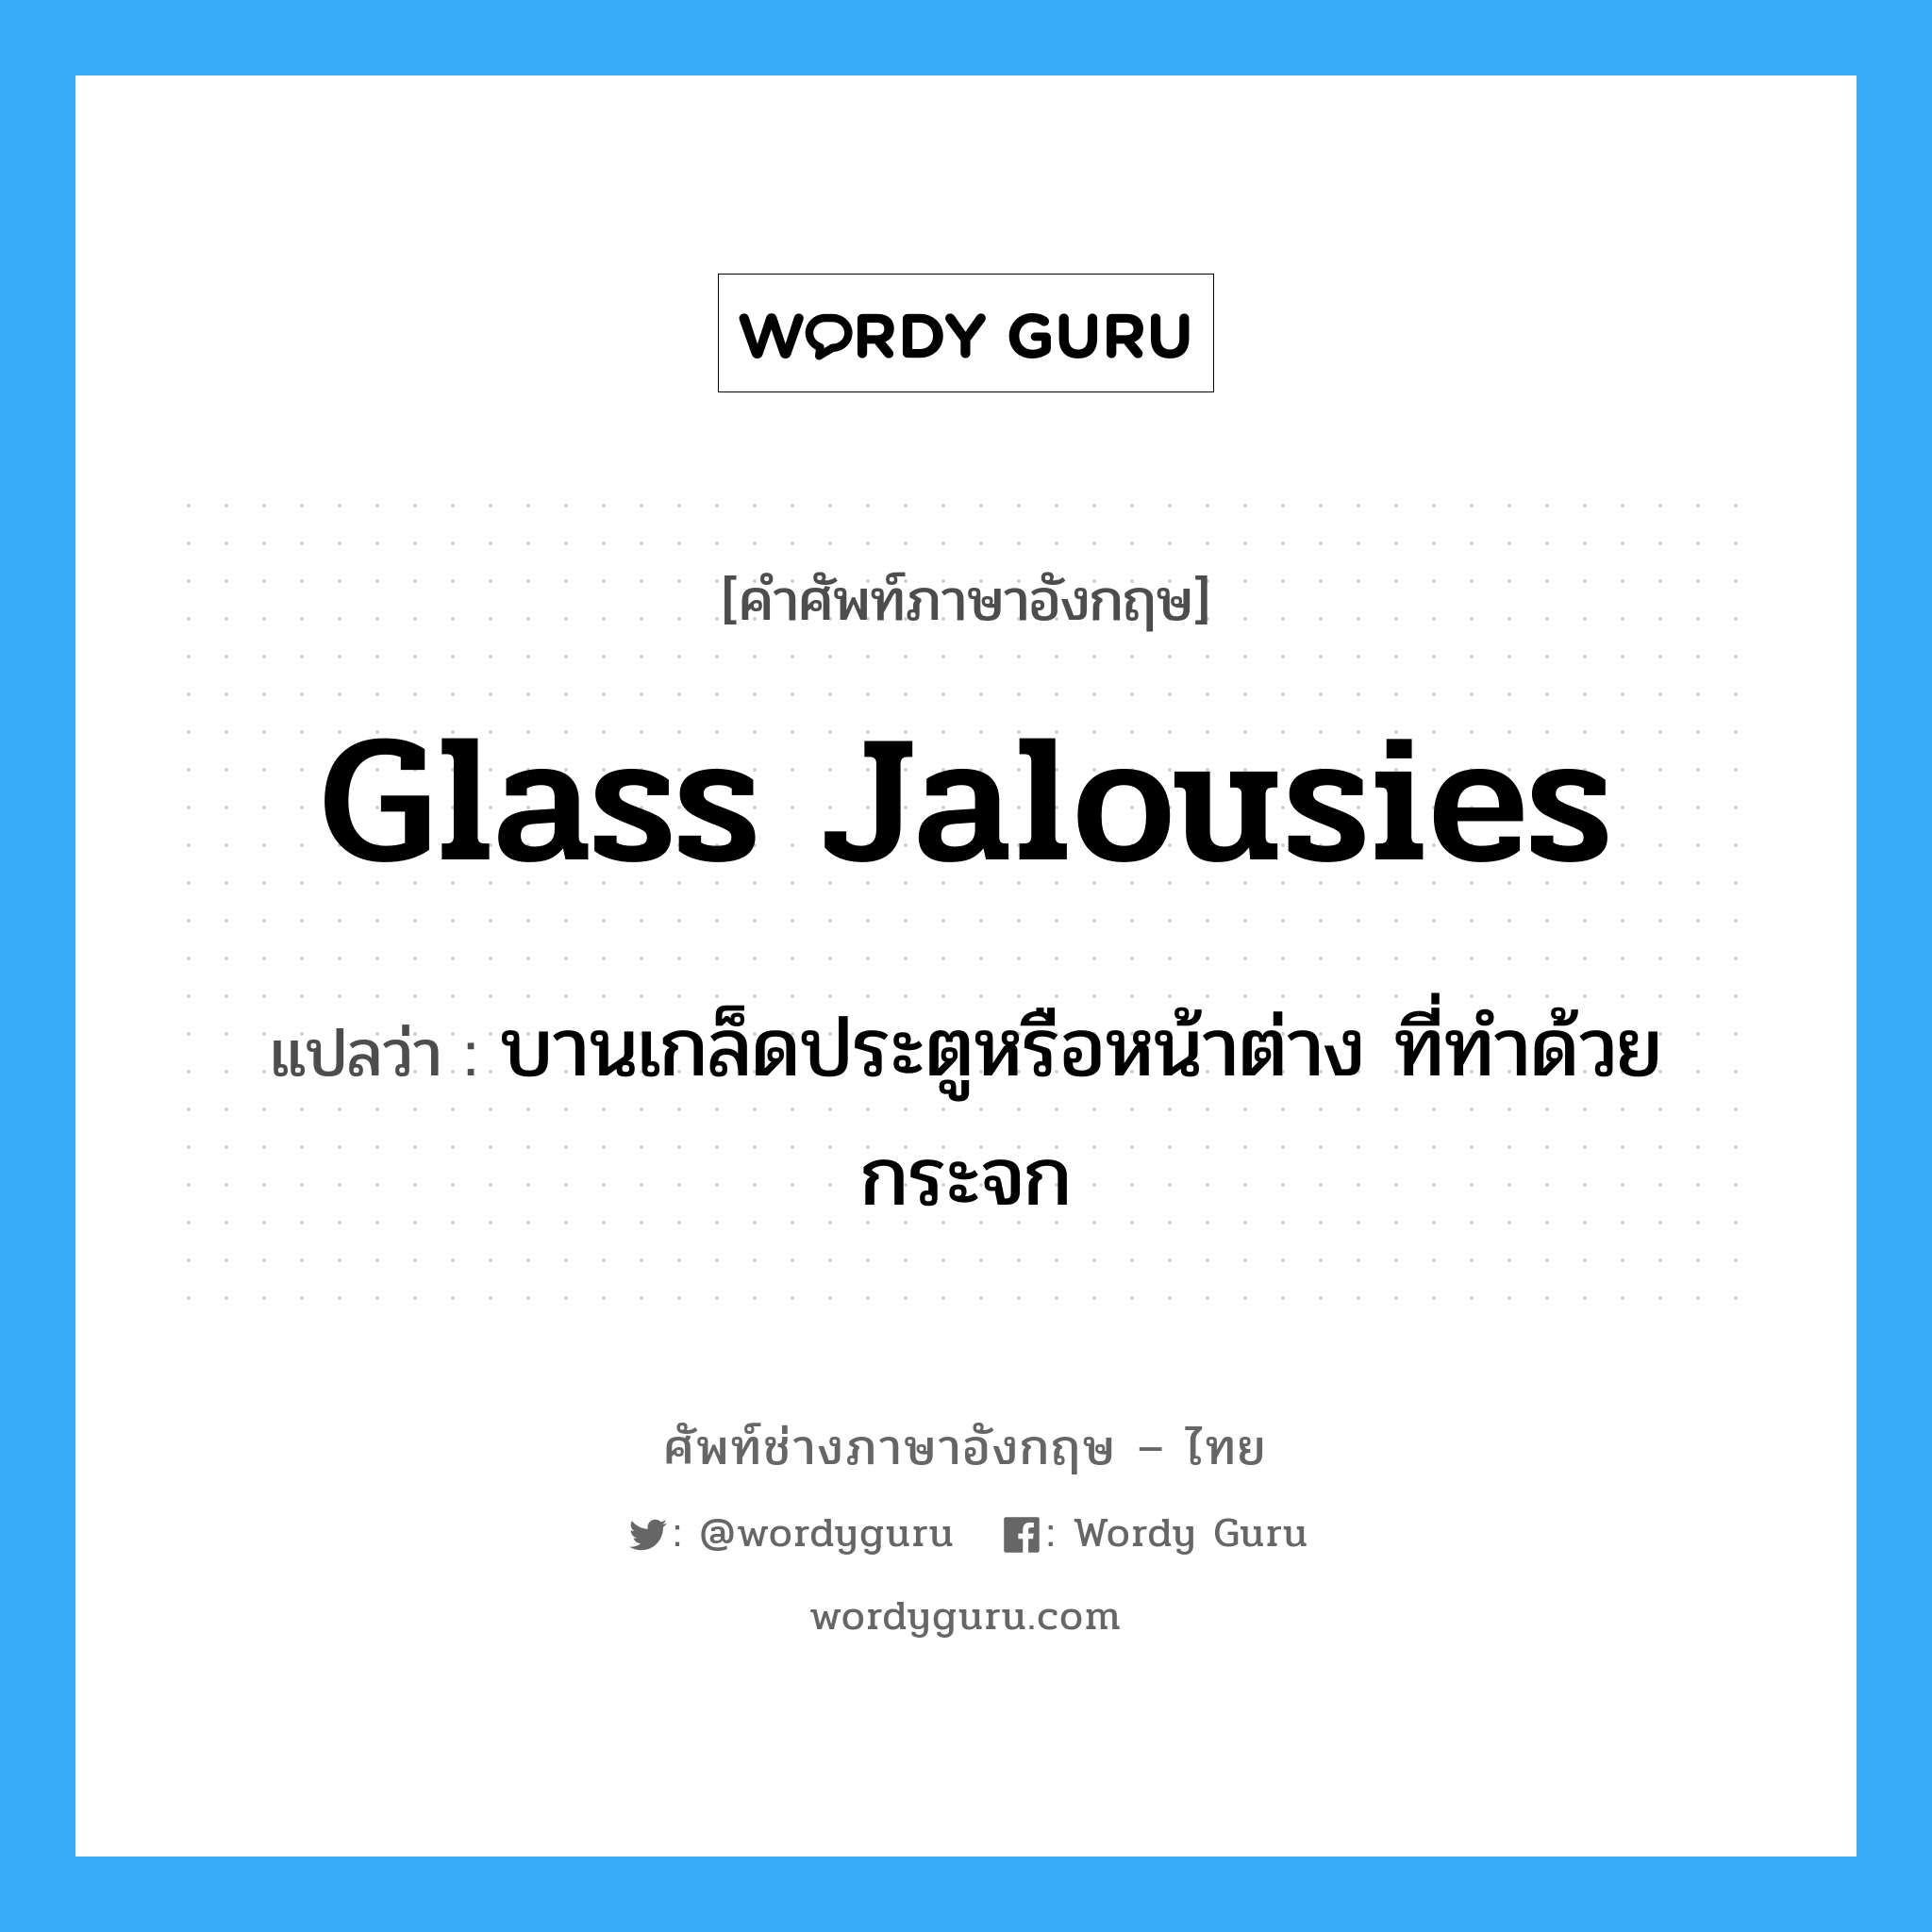 glass jalousies แปลว่า?, คำศัพท์ช่างภาษาอังกฤษ - ไทย glass jalousies คำศัพท์ภาษาอังกฤษ glass jalousies แปลว่า บานเกล็ดประตูหรือหน้าต่าง ที่ทำด้วยกระจก